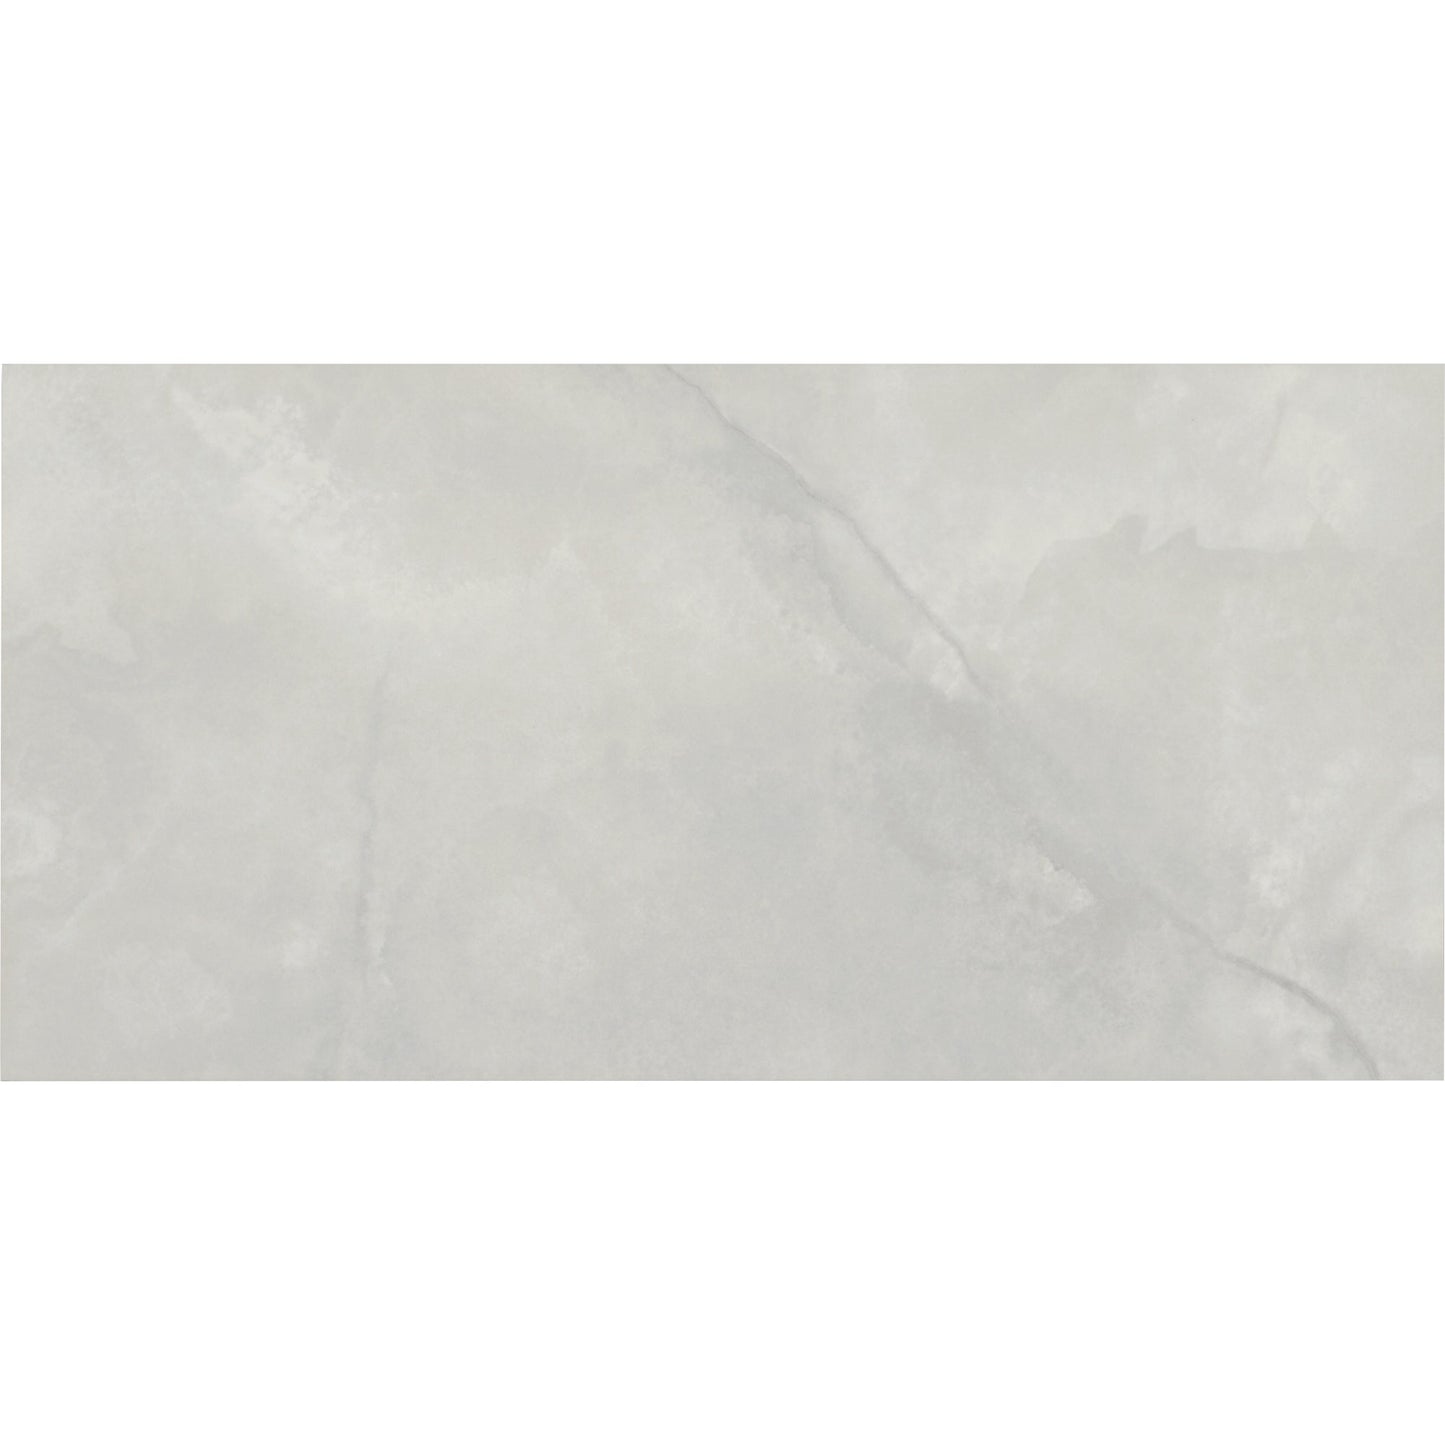 FLORENCE GLOSS Grey Rectified Ceramic Marble Gloss Wall Tiles 30cmx60cm